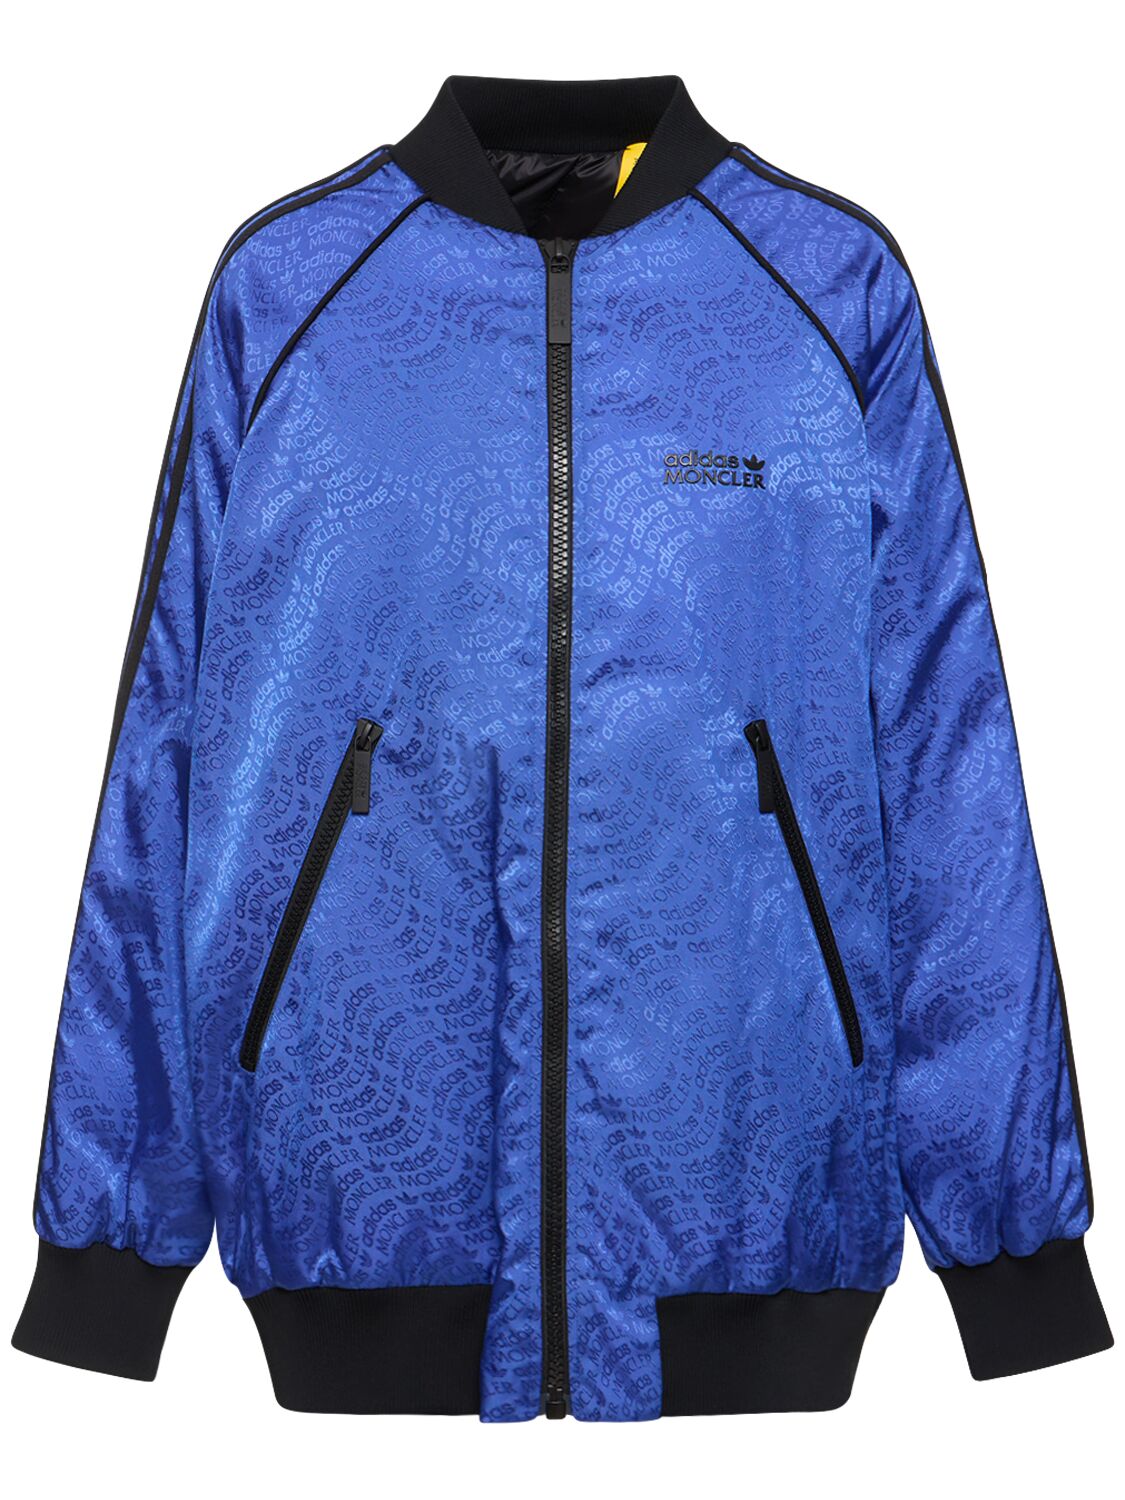 Moncler Genius Moncler X Adidas Seelos Down Jacket In Dark Blue